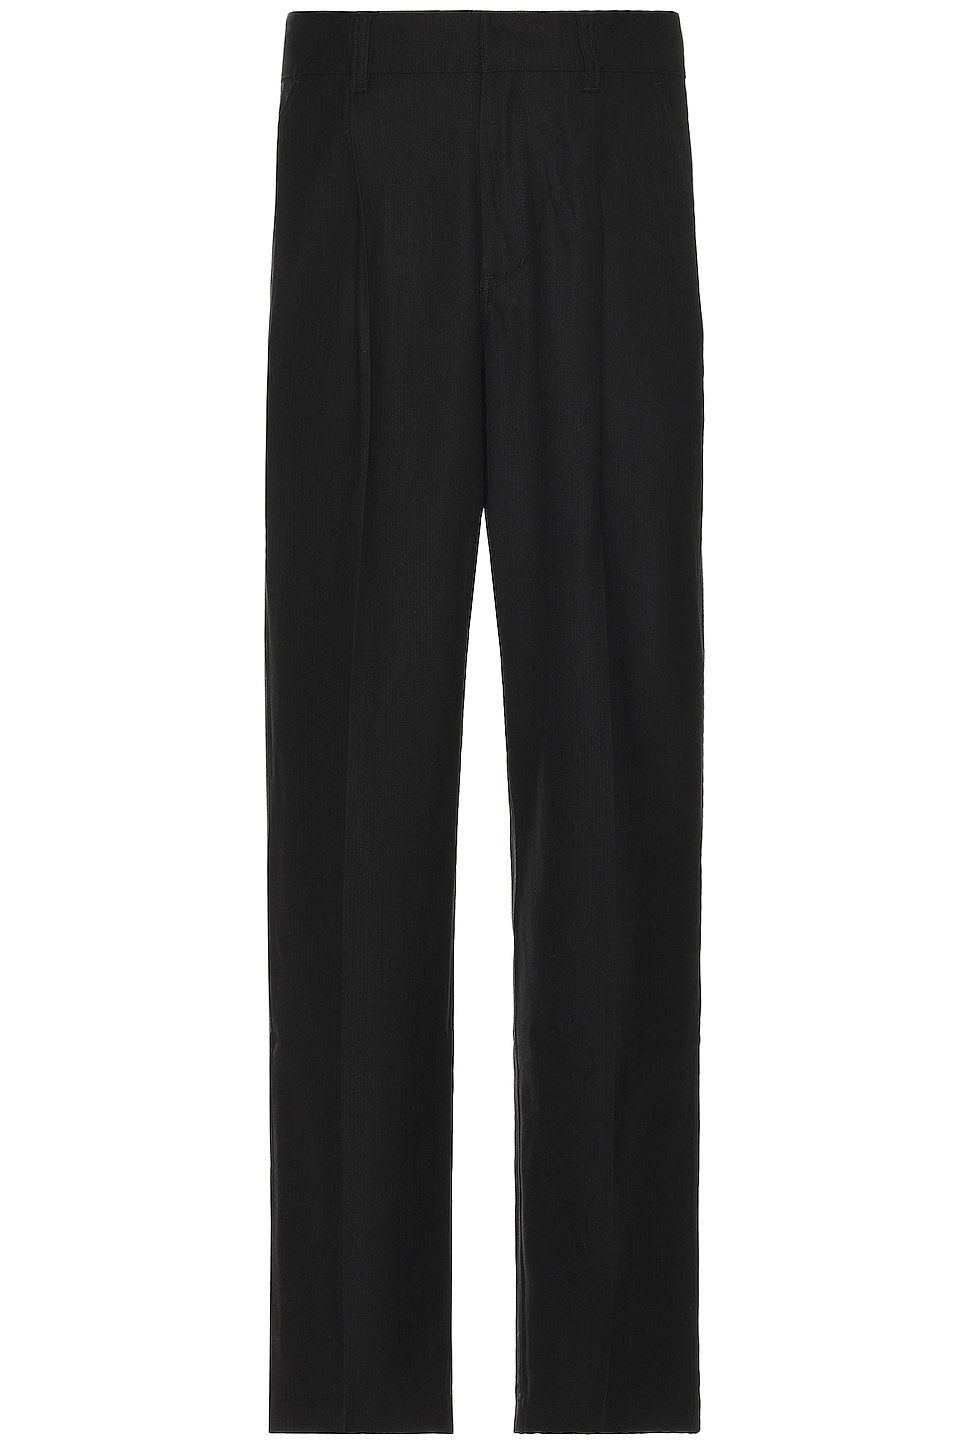 Image 1 of SATURDAYS NYC George Suit Trouser in Black